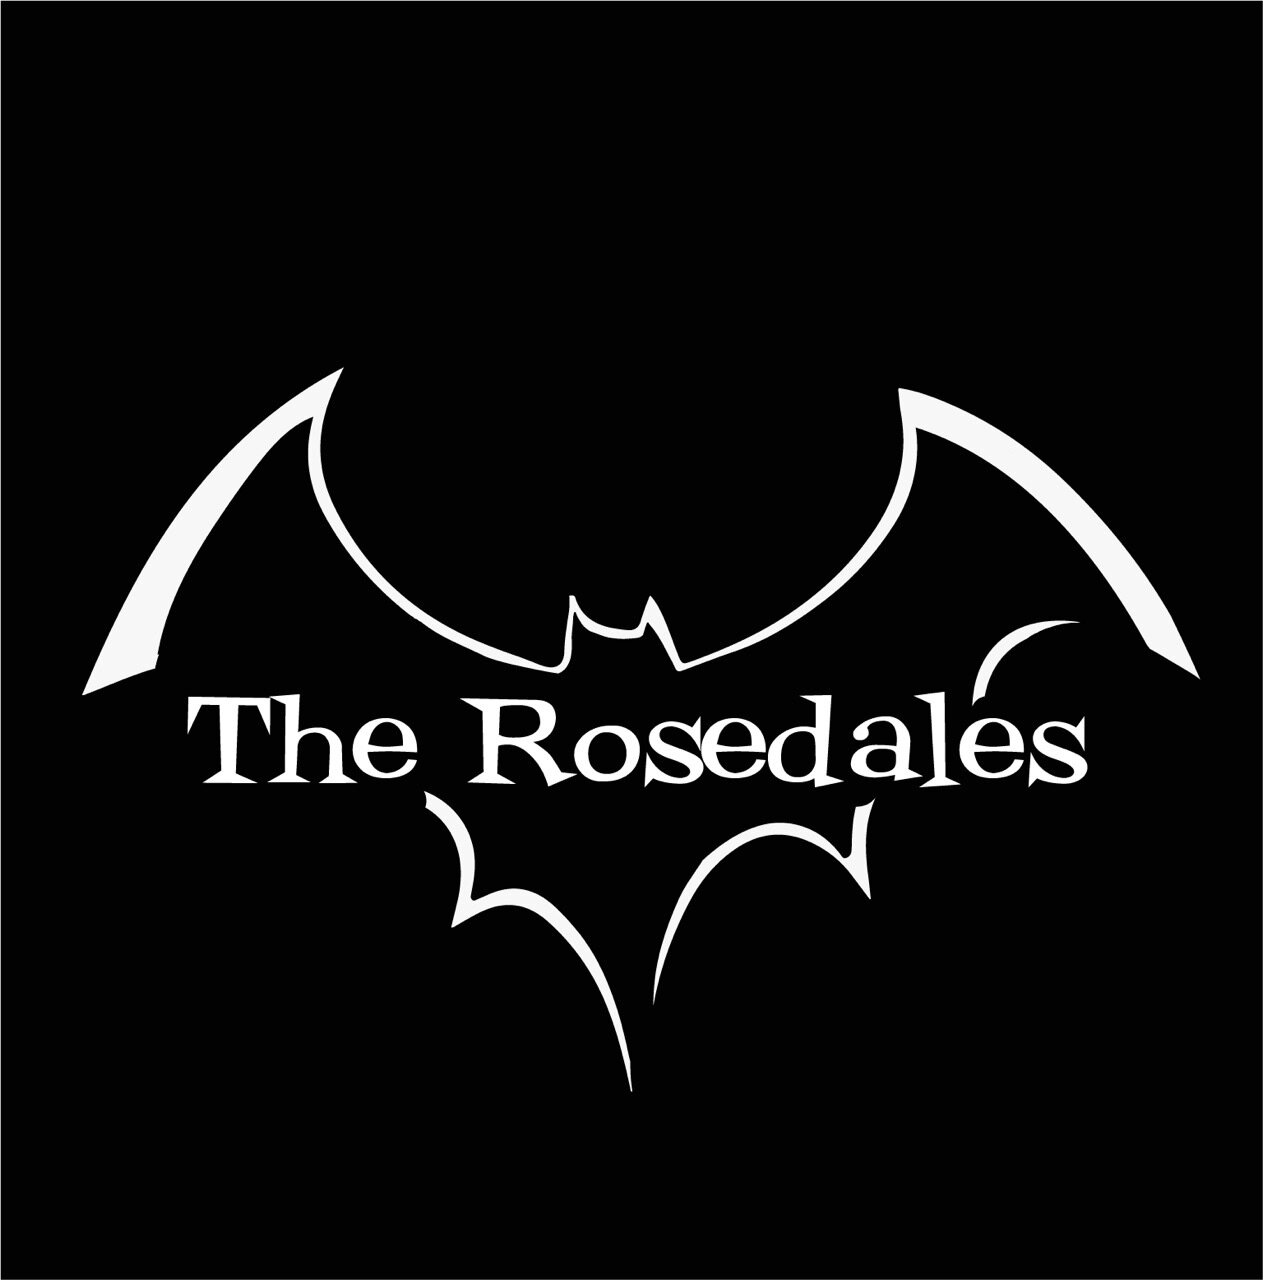 Rosedales logo.jpeg